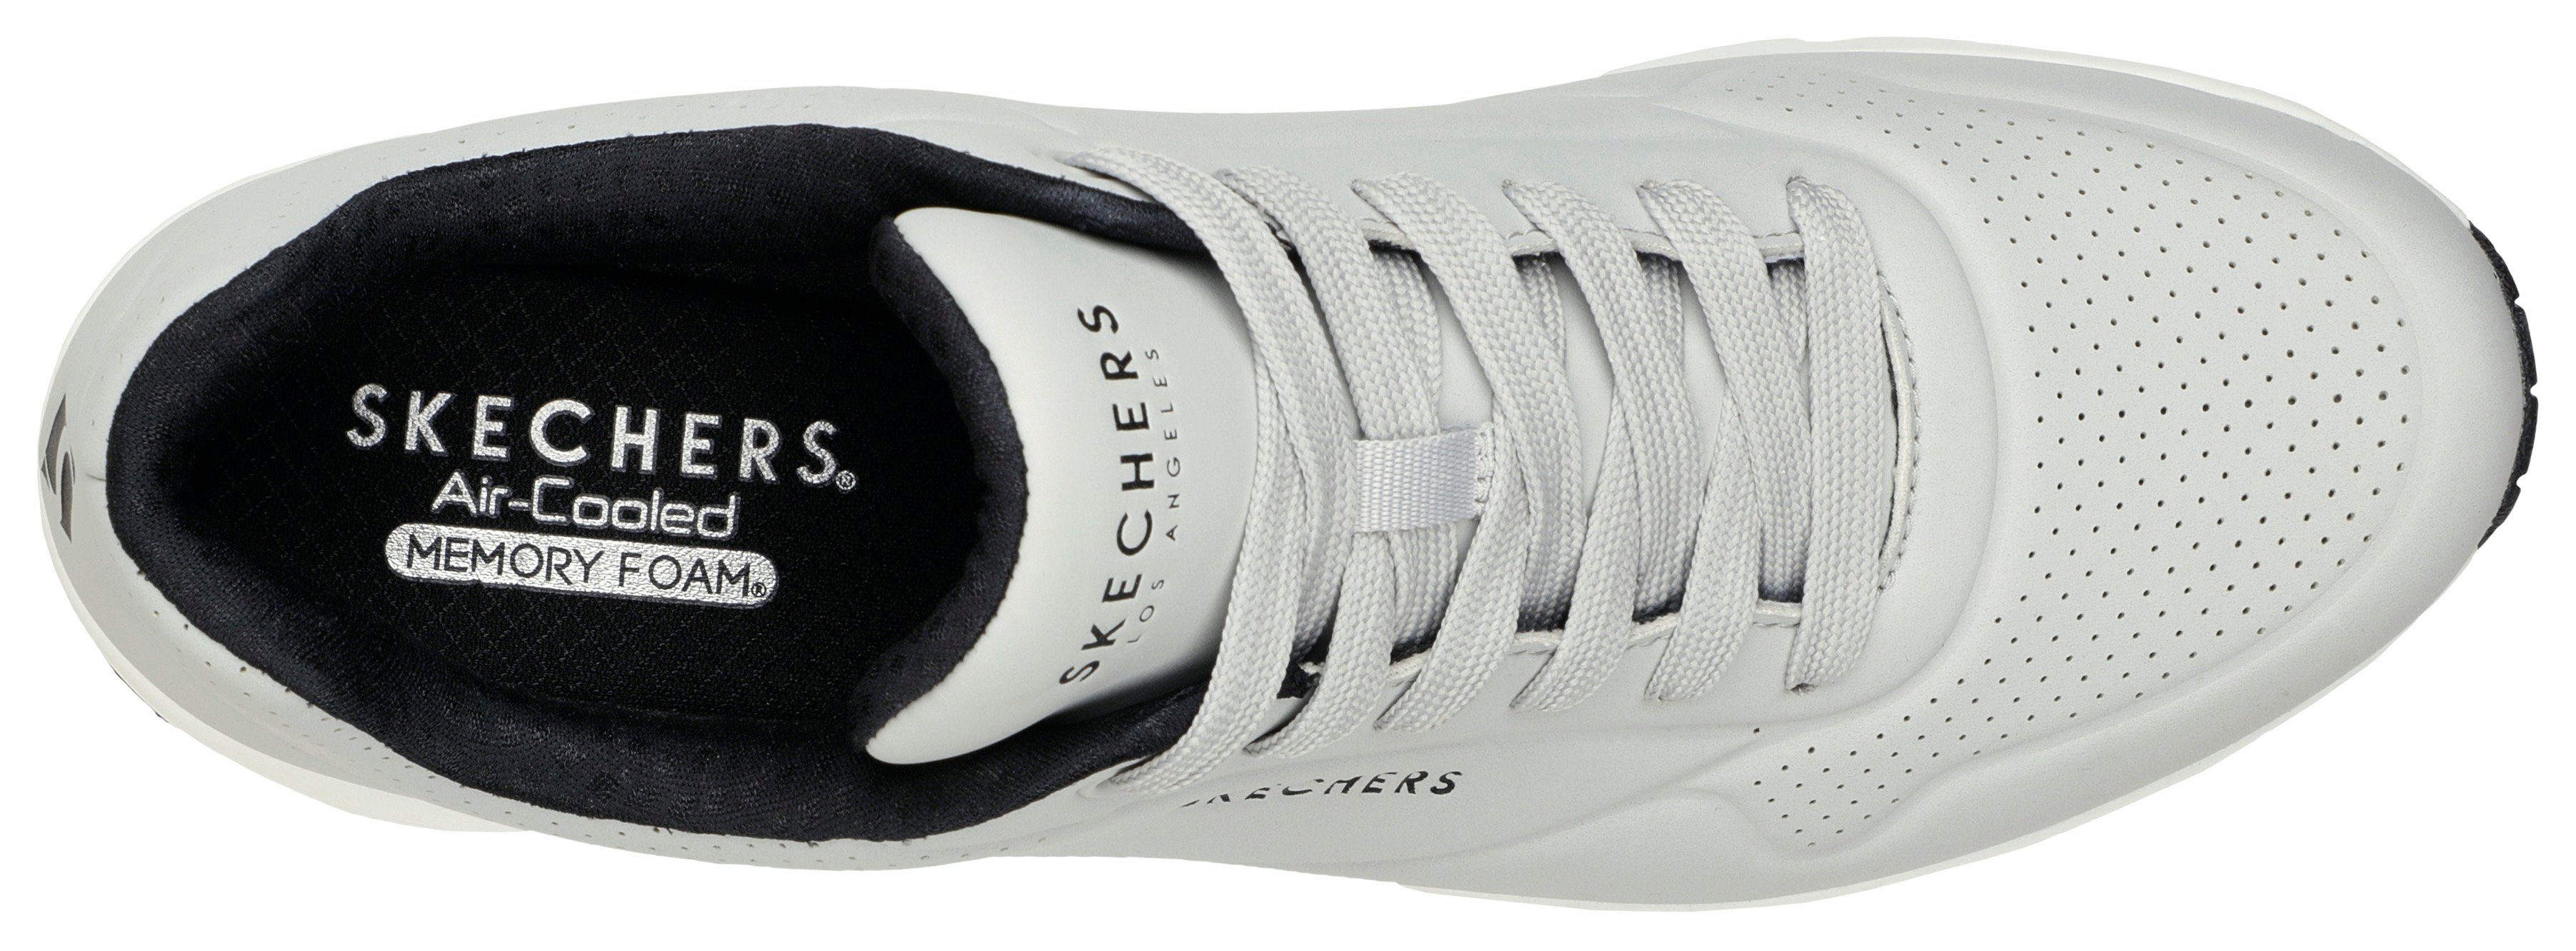 Memory Sneaker Uno hellgrau-schwarz Skechers mit Foam Air-Cooled